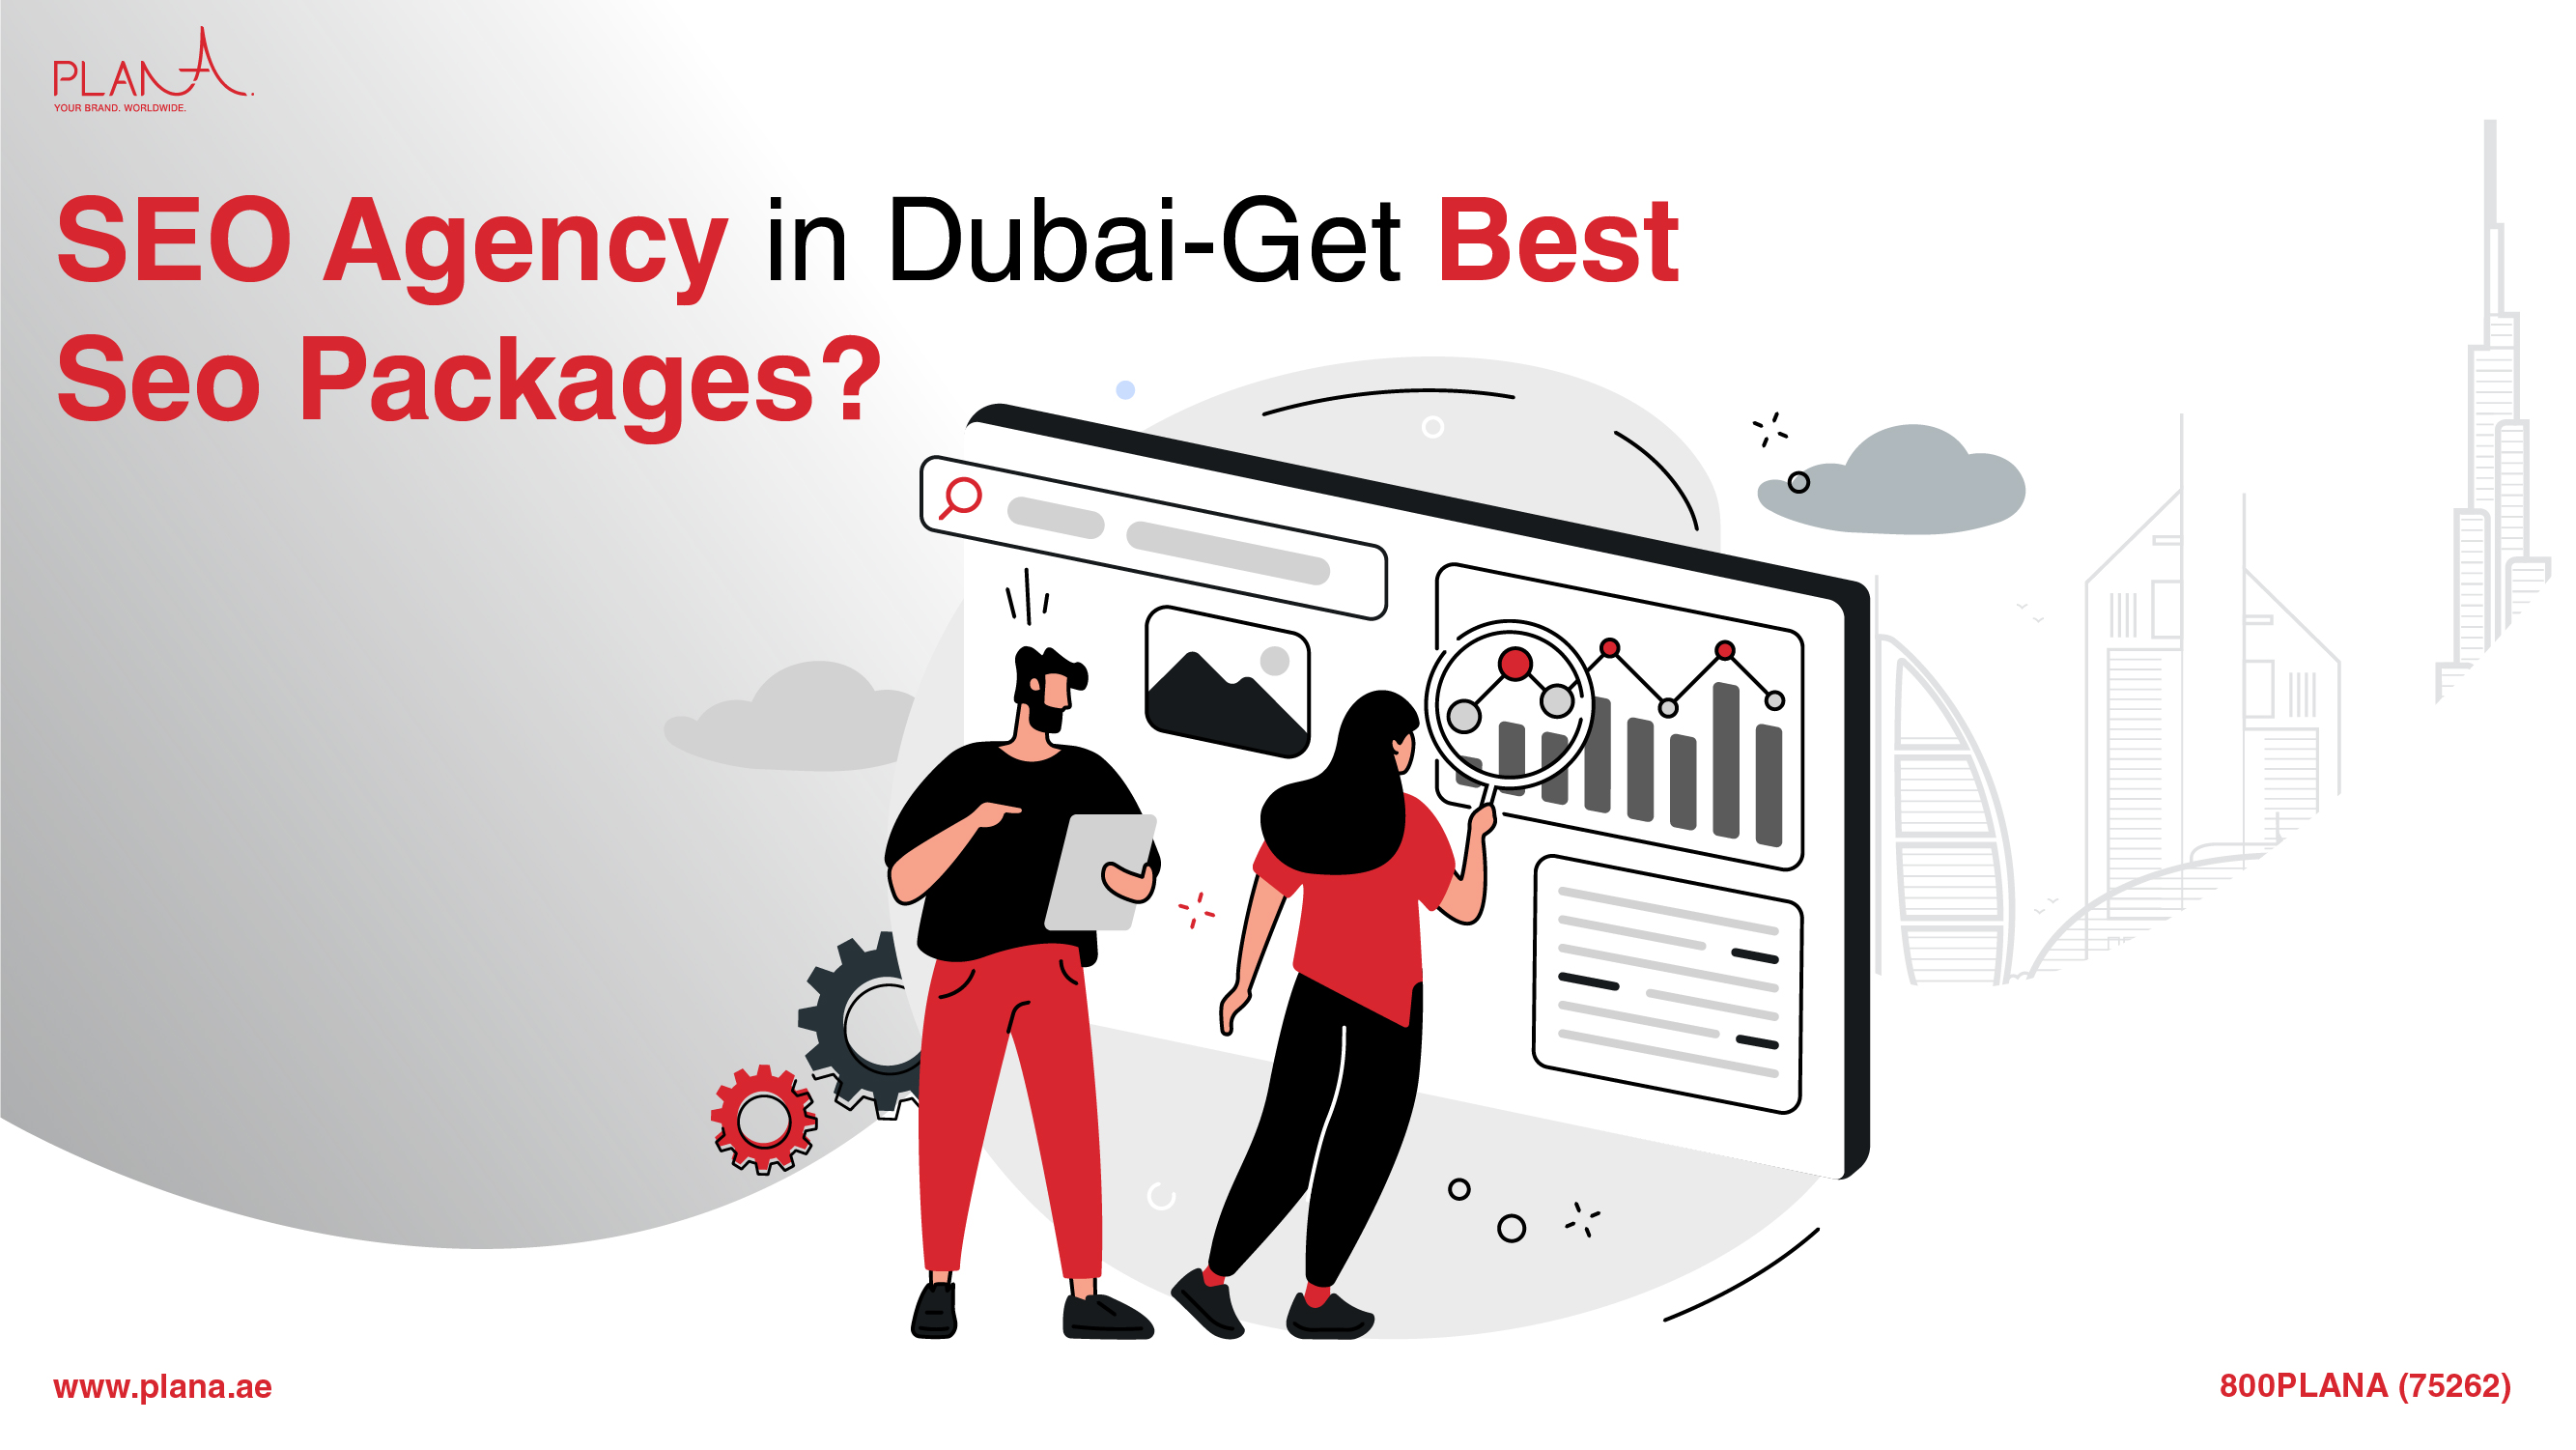 SEO Agency in Dubai - Get Best Seo Packages?